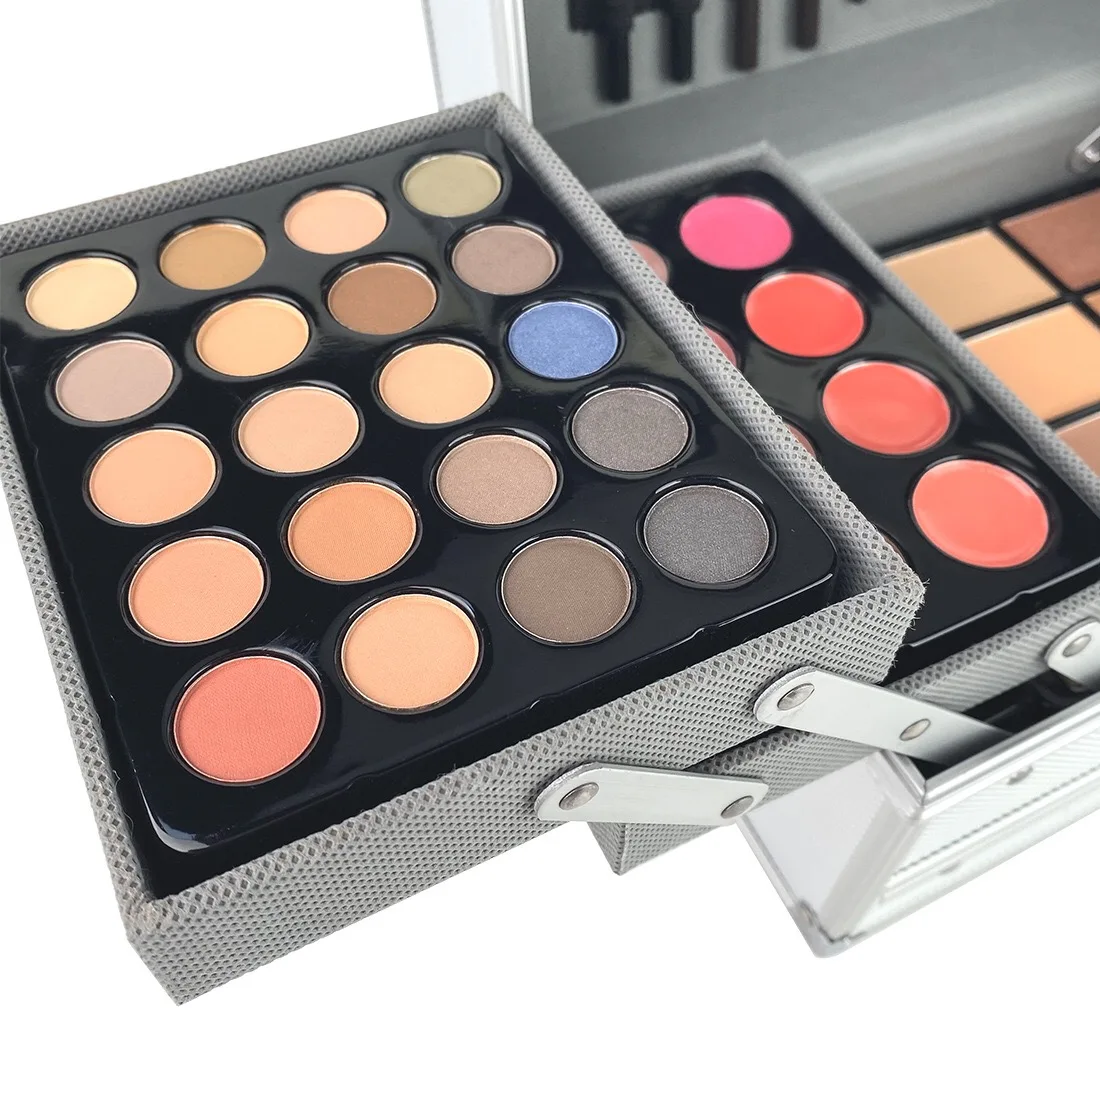 

MISS ROSE Professional 132 colors Eyeshadow Make Up Artist Case Set Blush Powder Lipstick Mascara Full Face Makeup Kit